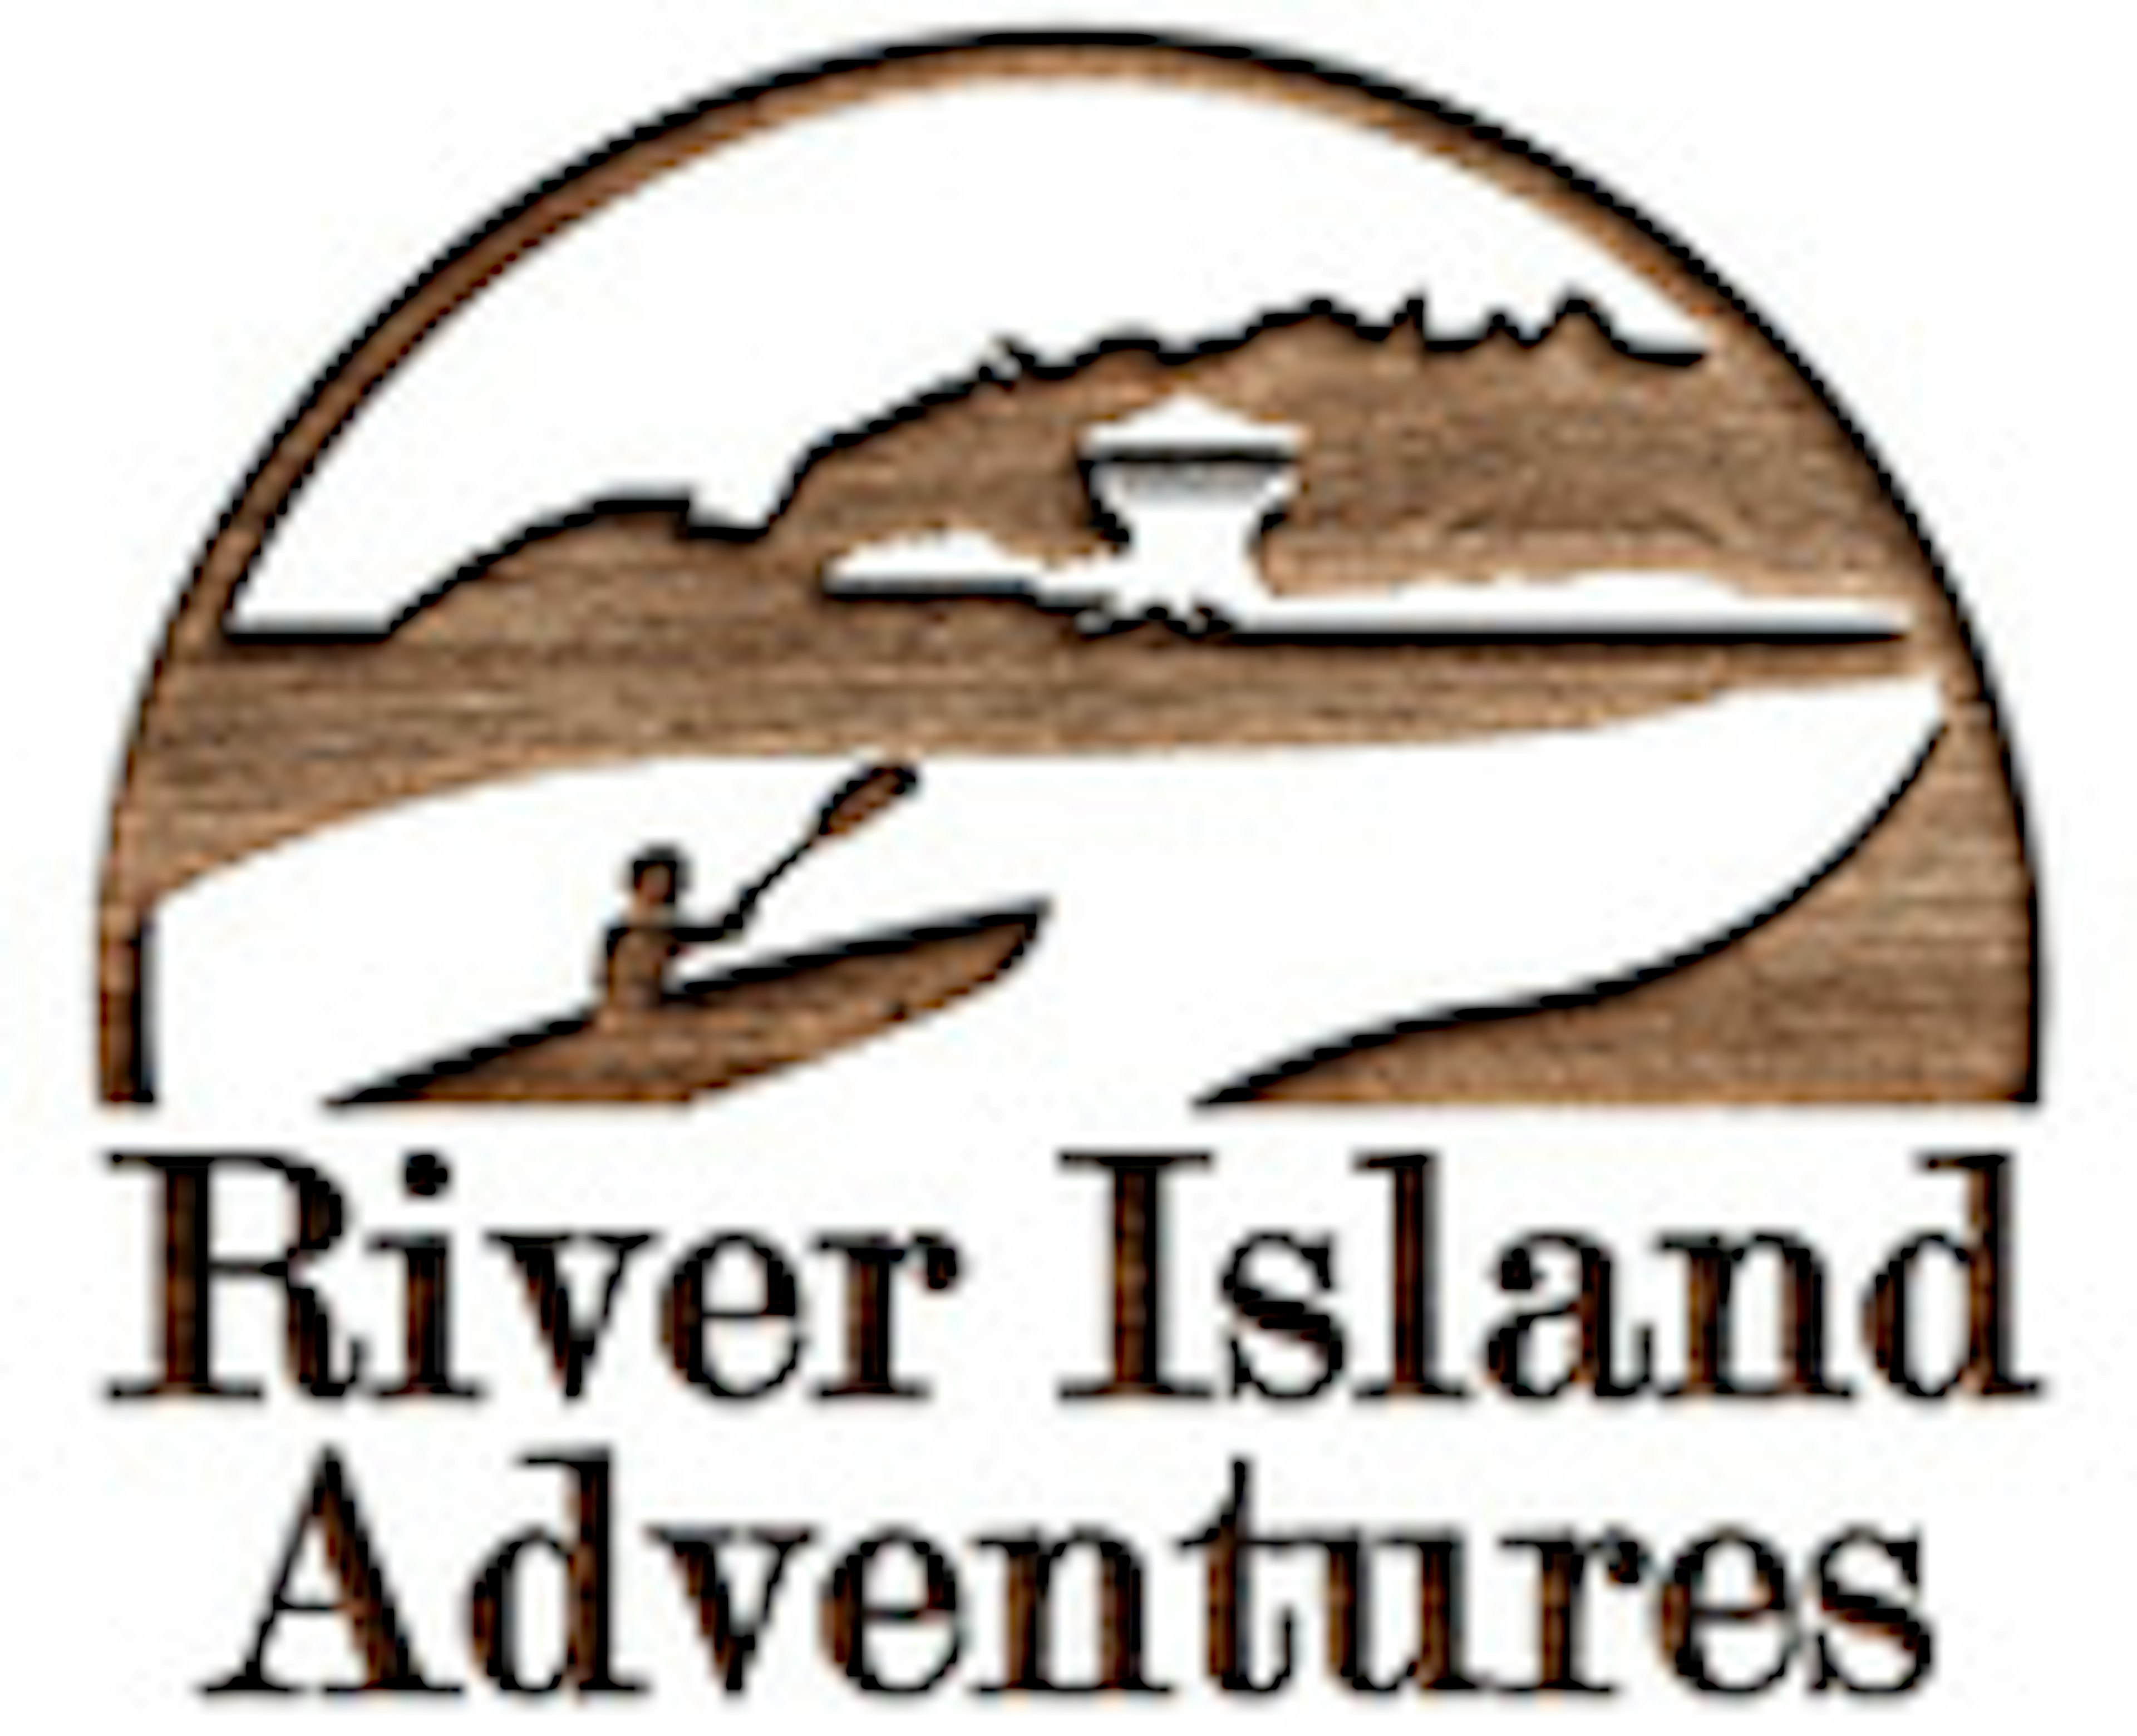 River Island Adventures